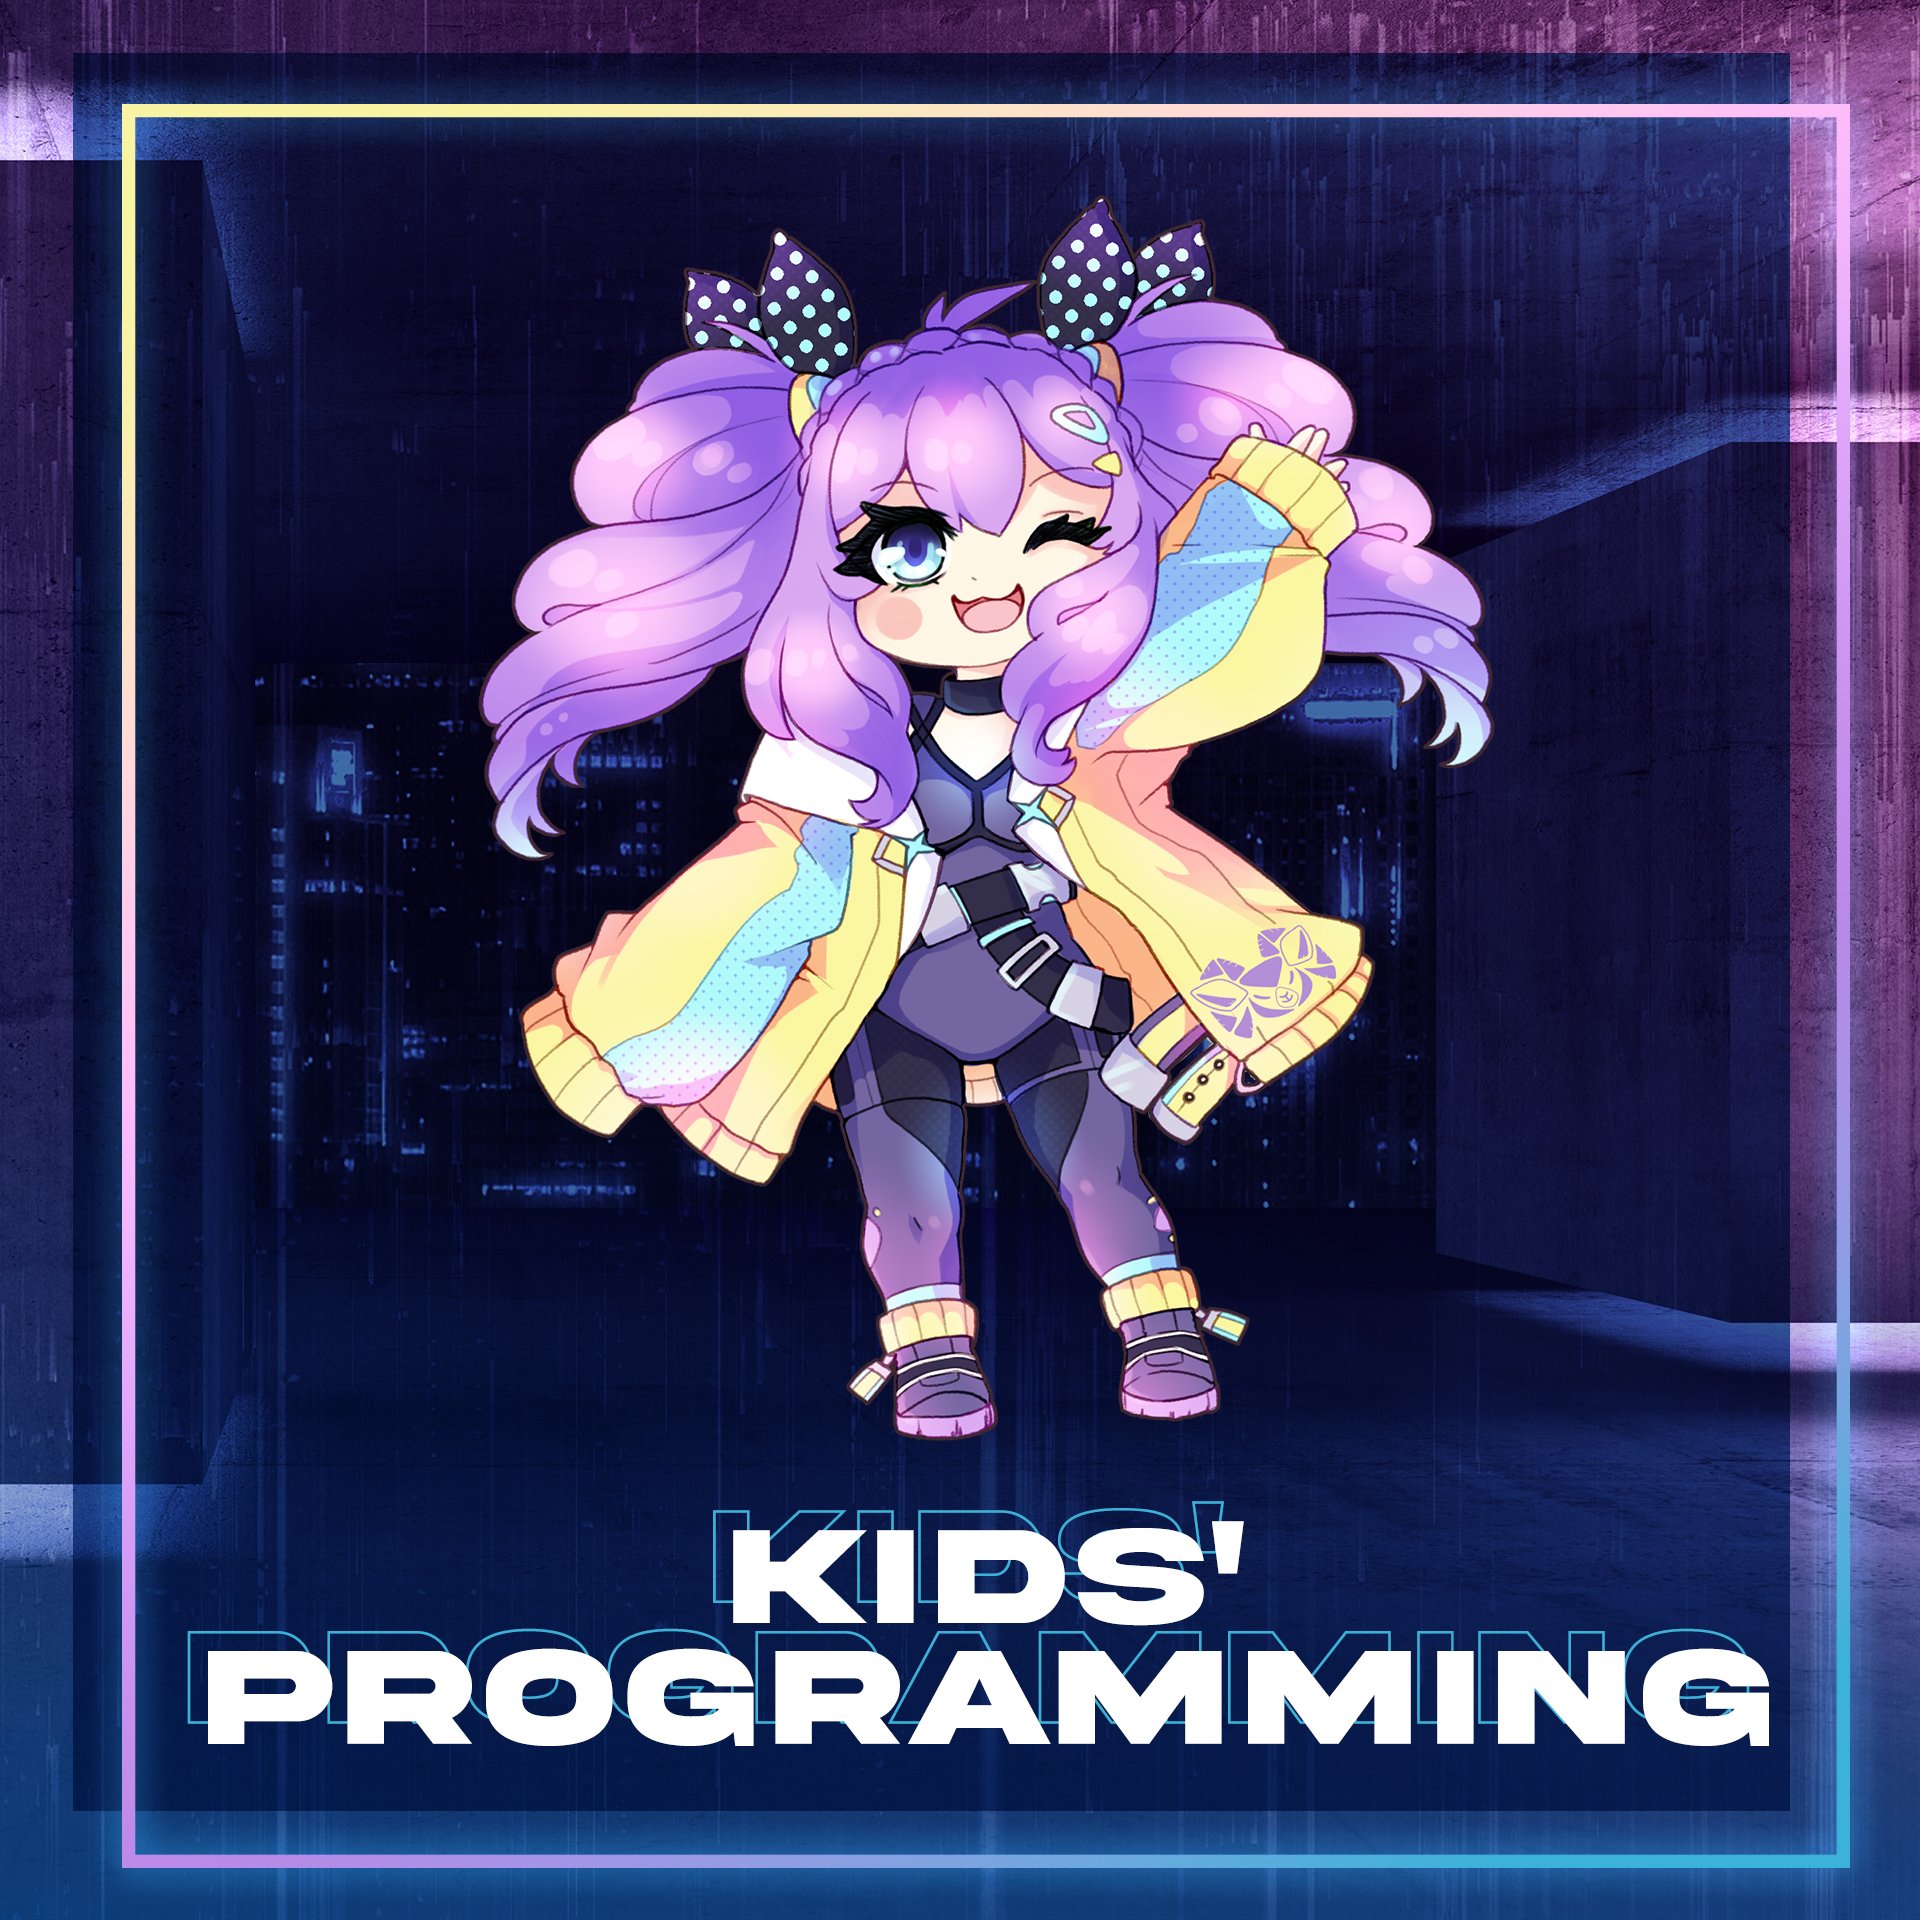 programmers, anime girls, anime, headphones, glasses, stockings, programming,  programming language | 3840x2160 Wallpaper - wallhaven.cc